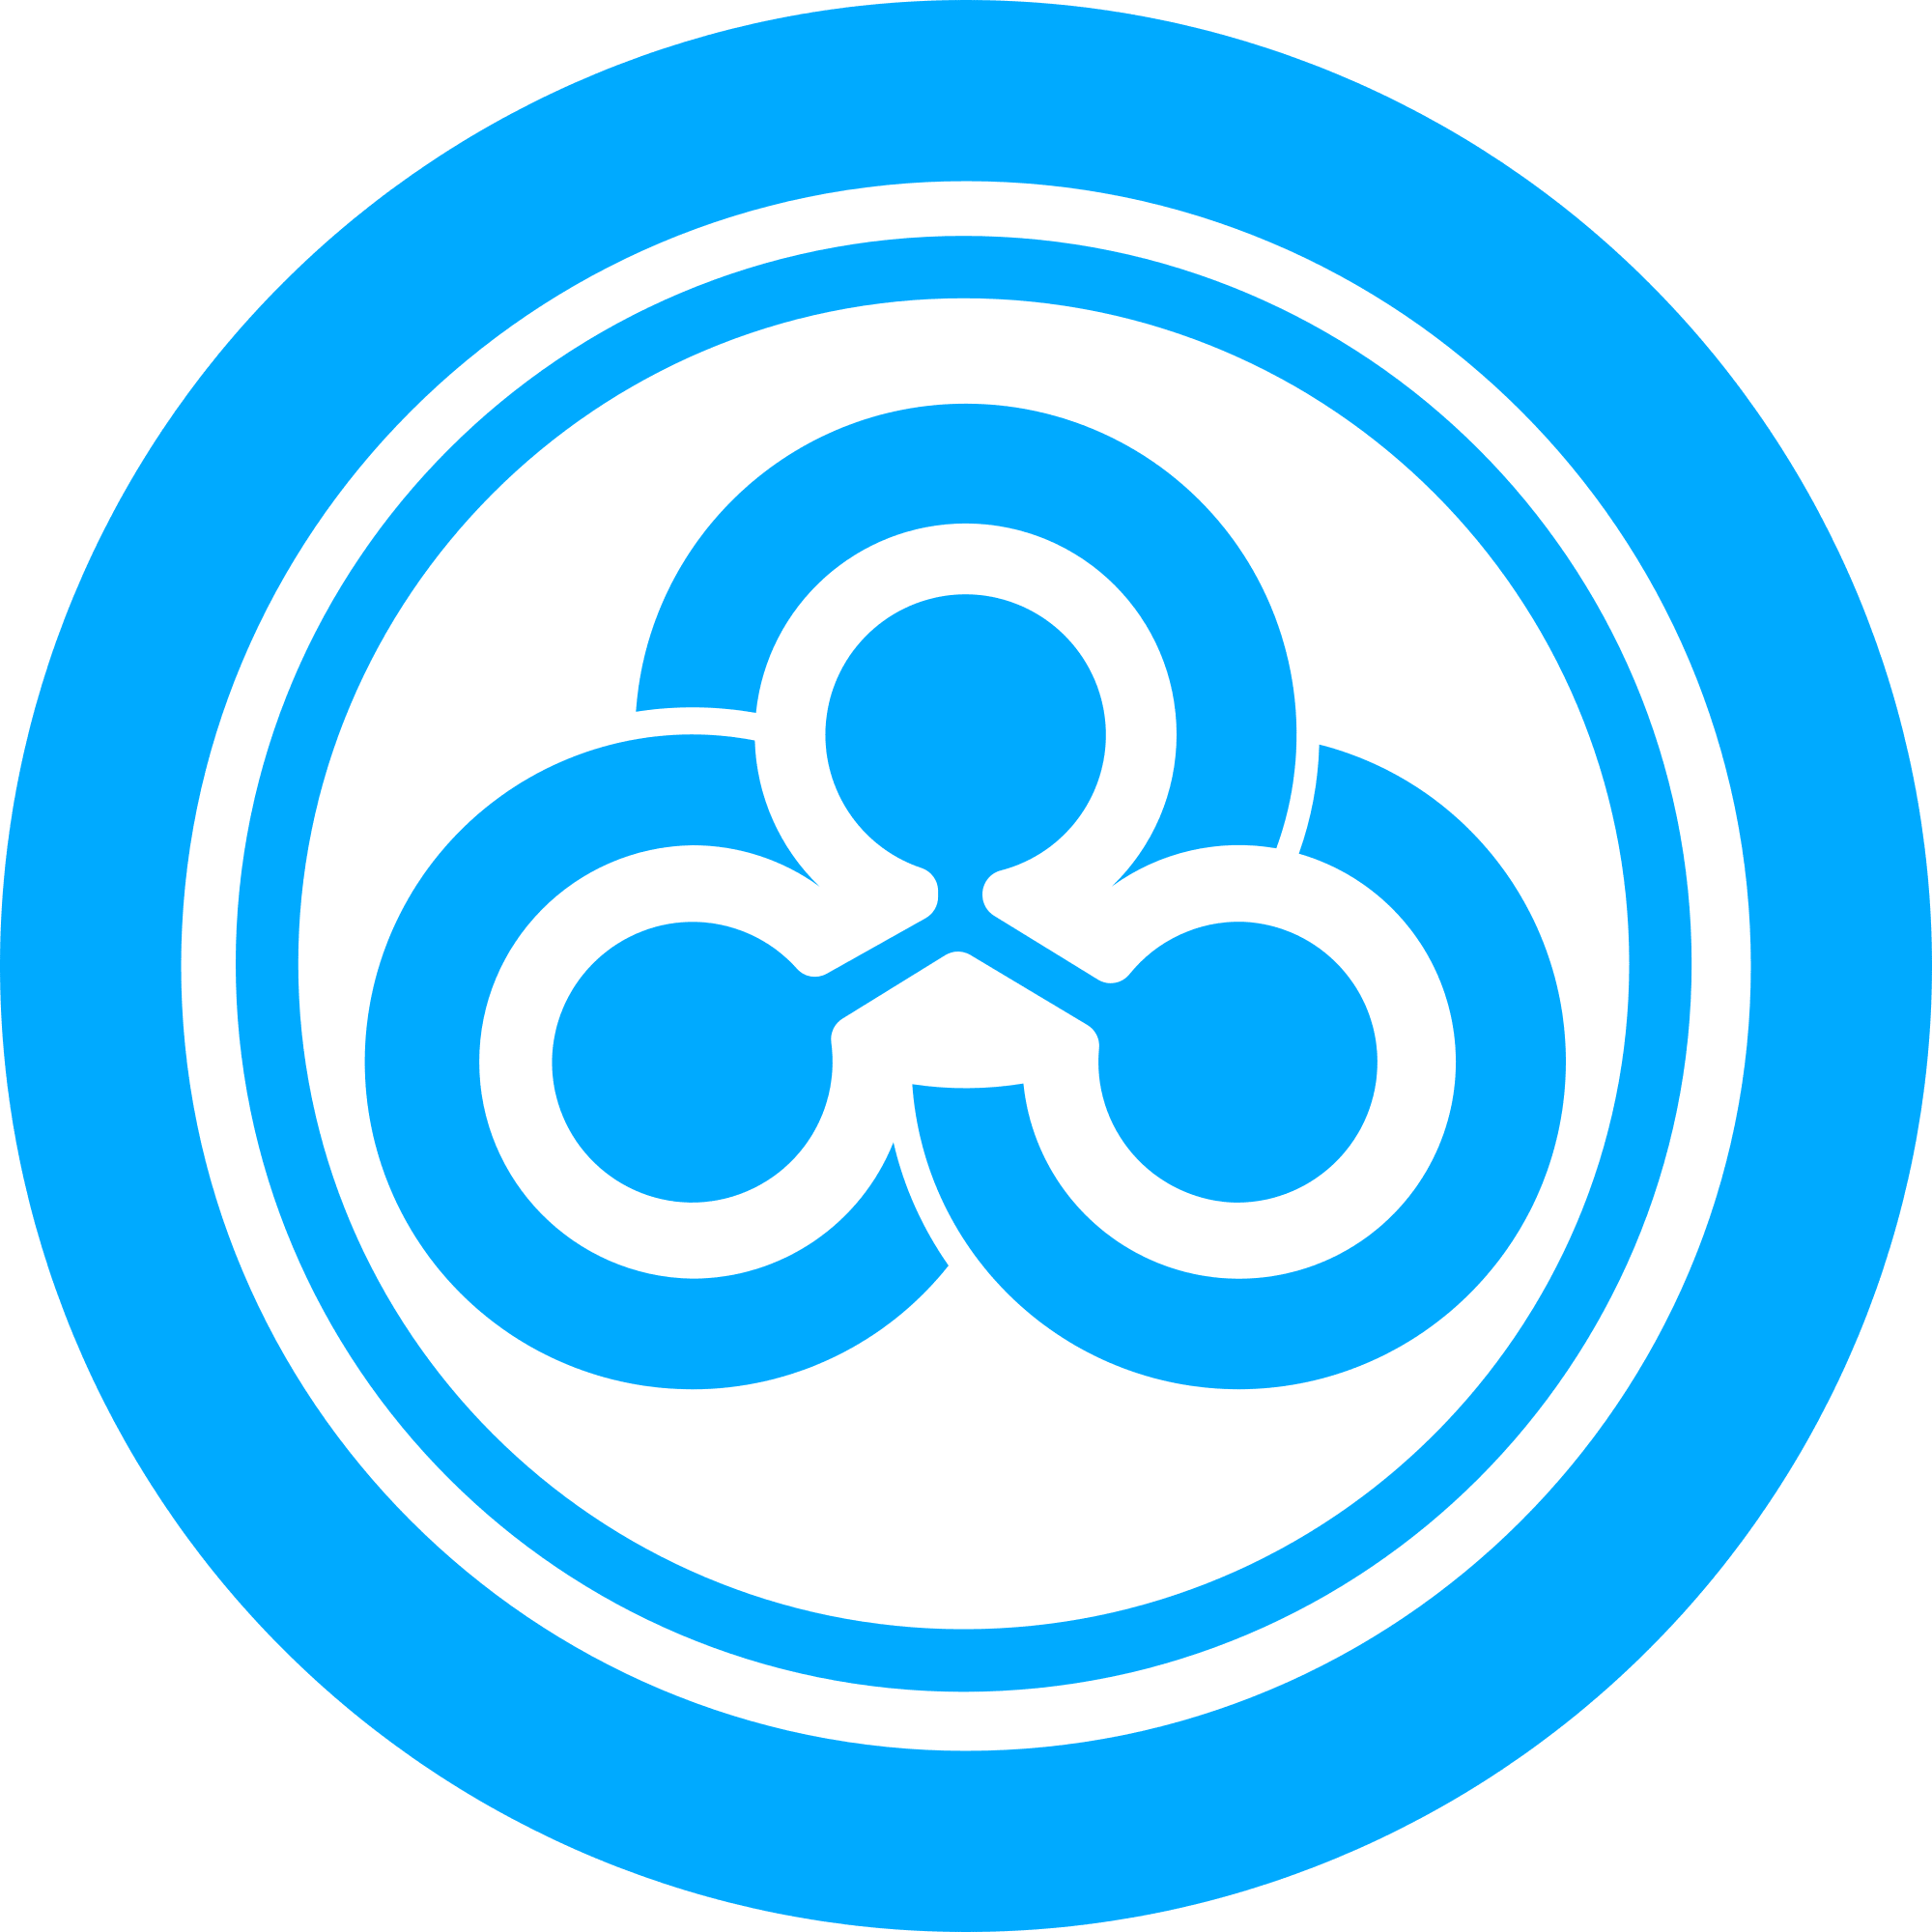 Bitcloud logo in png format